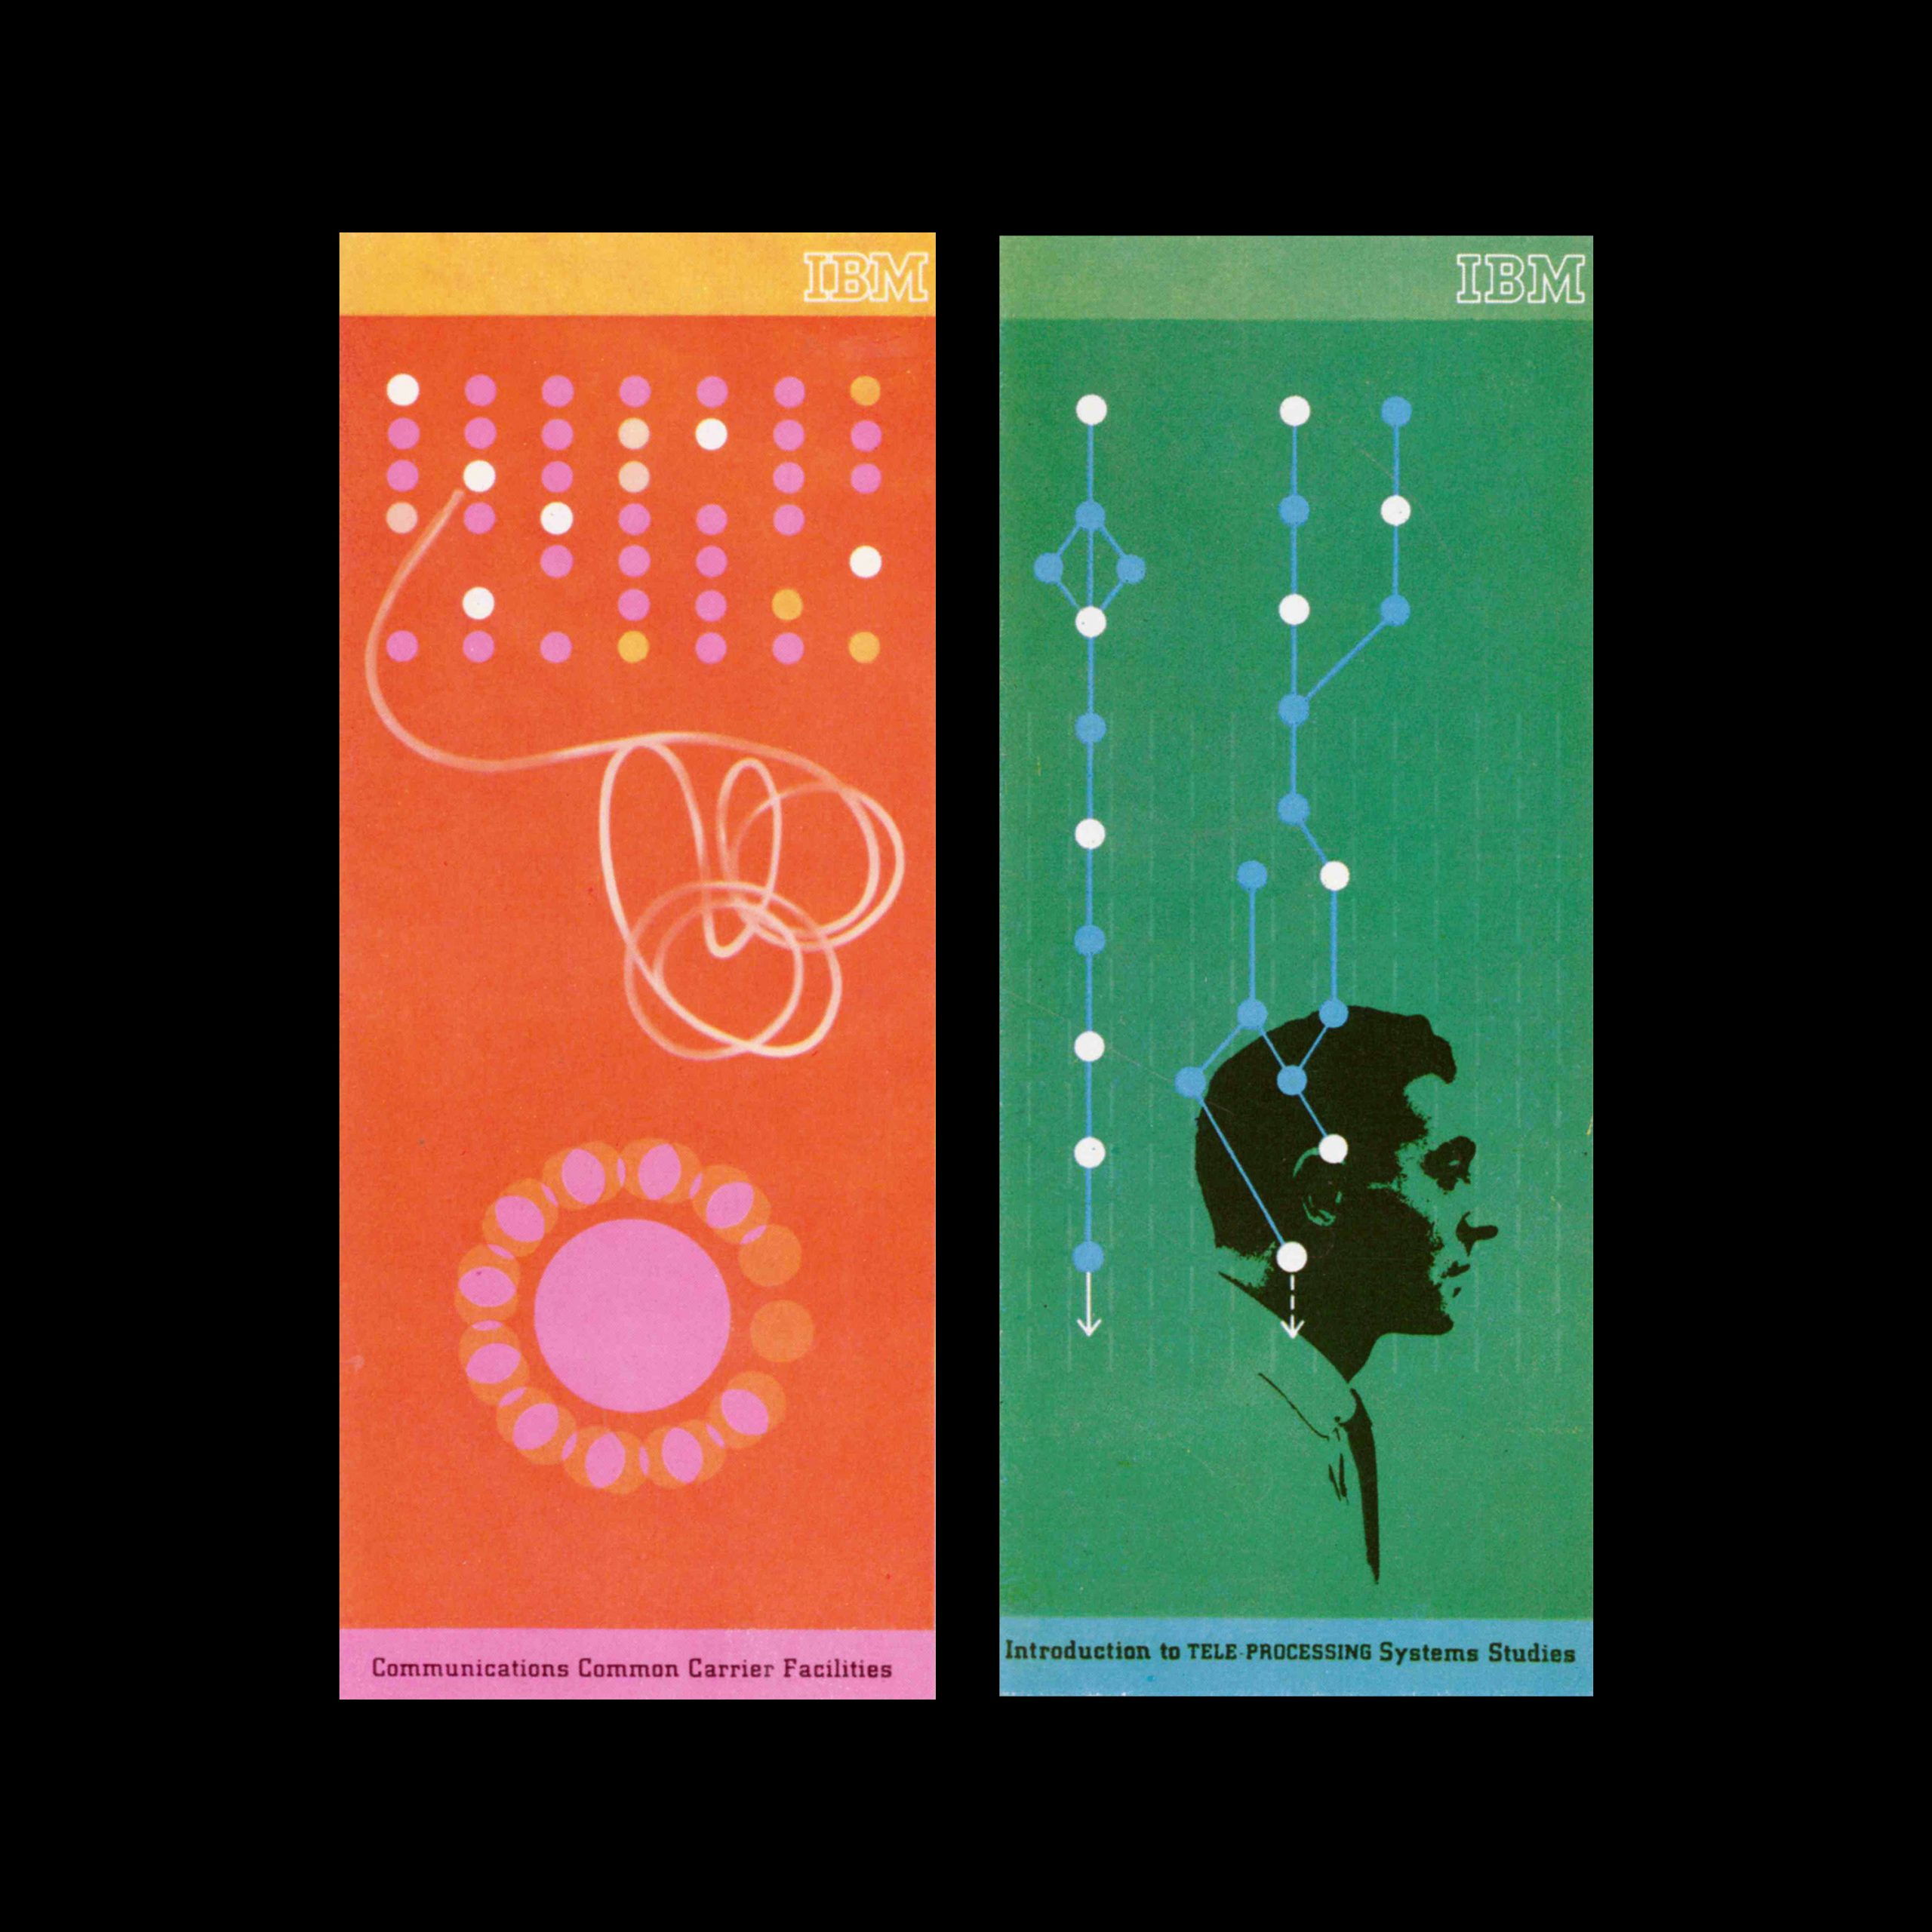 IBM Brochures designed by Clarence Lee